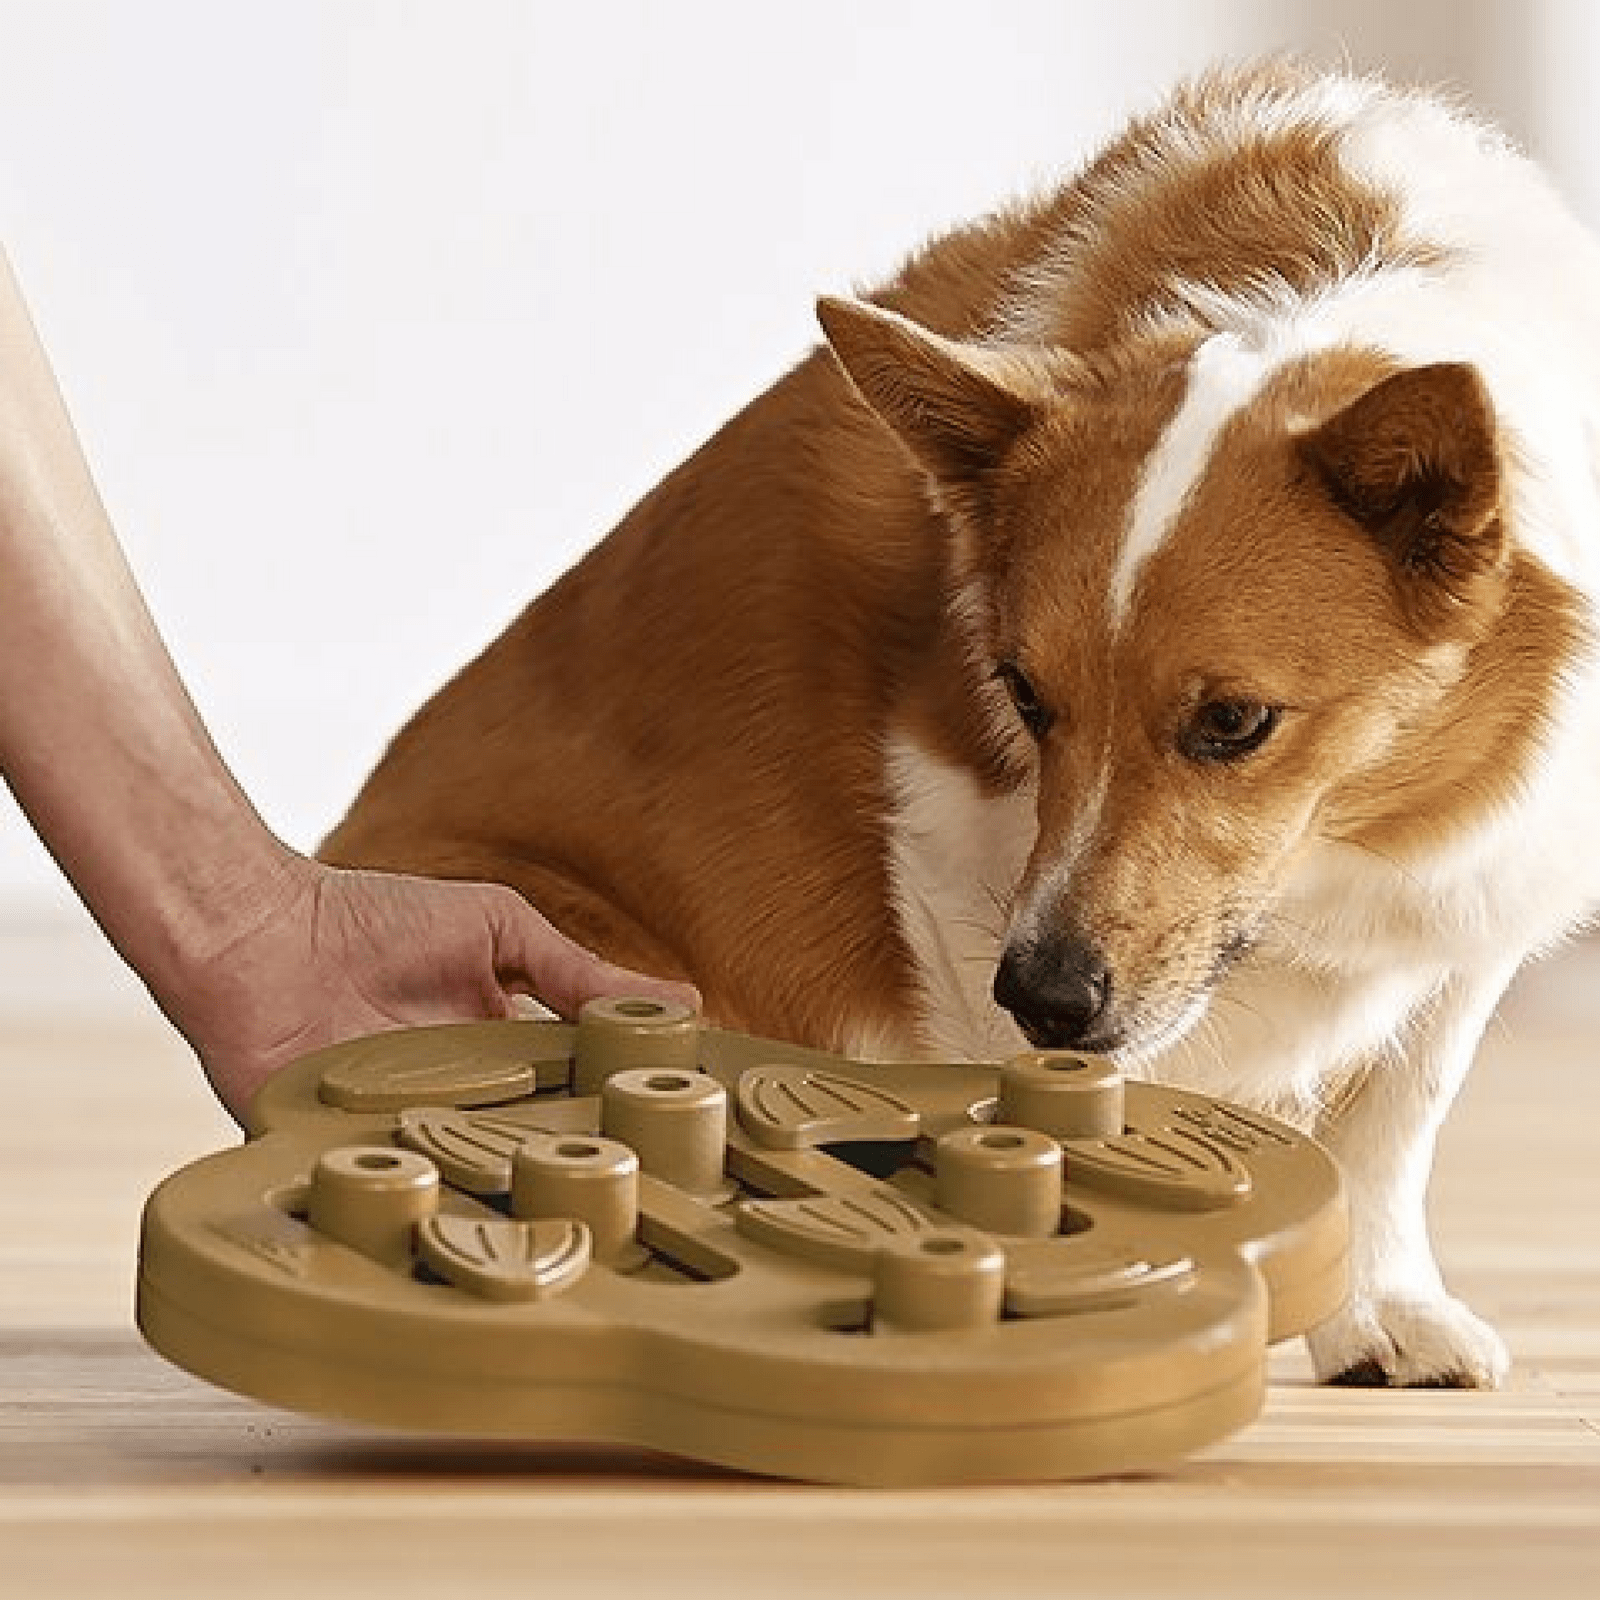 REVIEW NINA Ottosson Outward Houd Dog Smart Orange Interactive Treat Puzzle  Dog Toy Level 1 